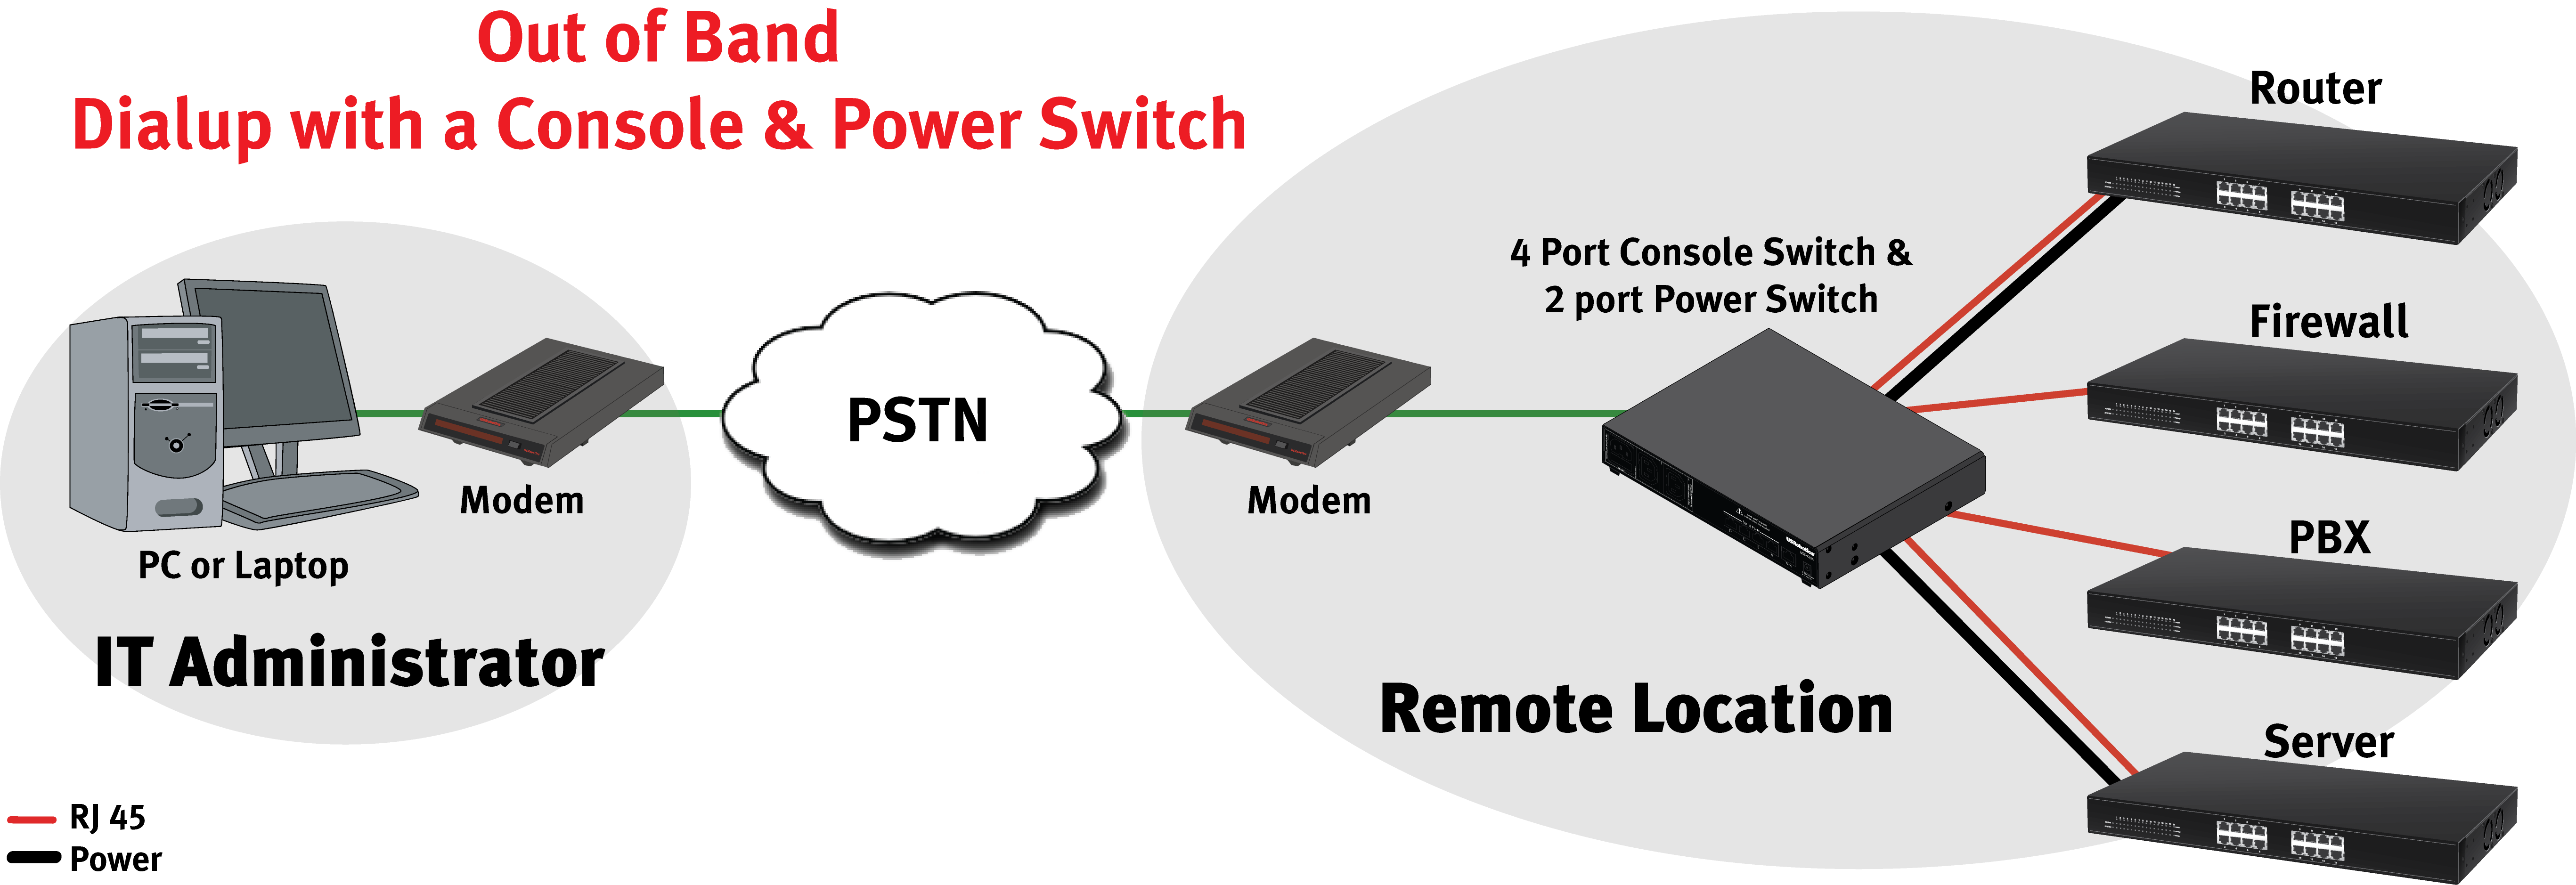 Console Server & Power Switch Hybrid diagram